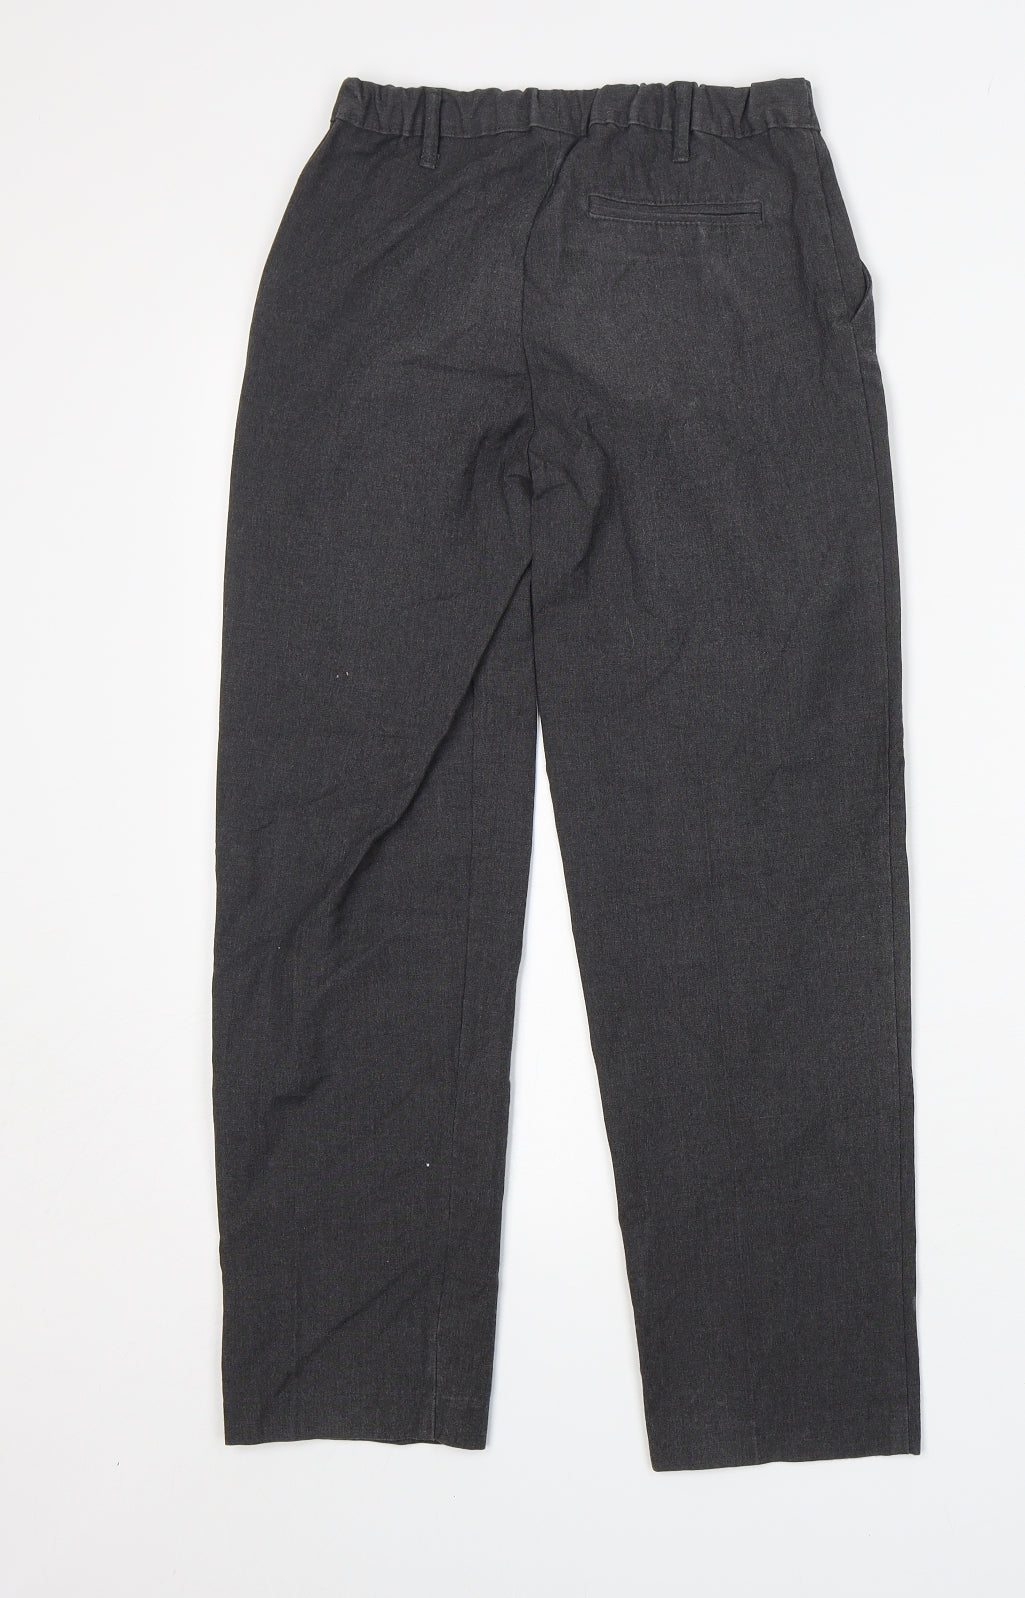 Lily & dan Boys Grey  Polyester Dress Pants Trousers Size 10-11 Years  Regular  - School Wear